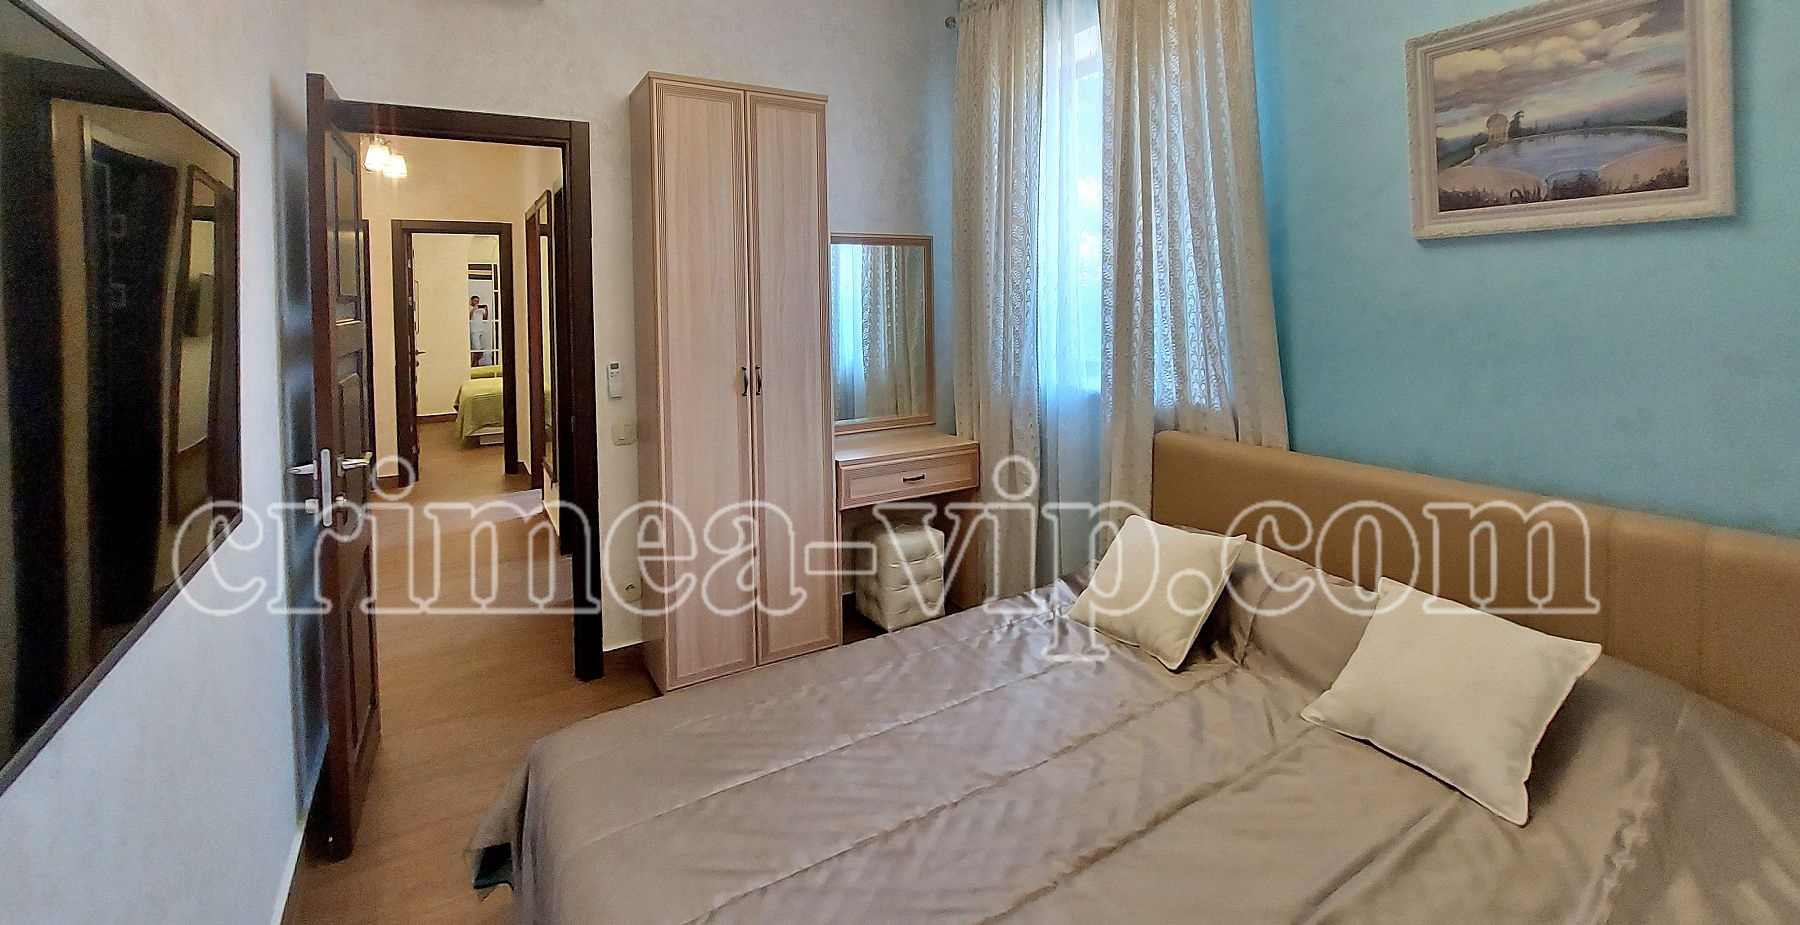 АПД-3010. Апартаменты на 2 спальни в Бекетово.